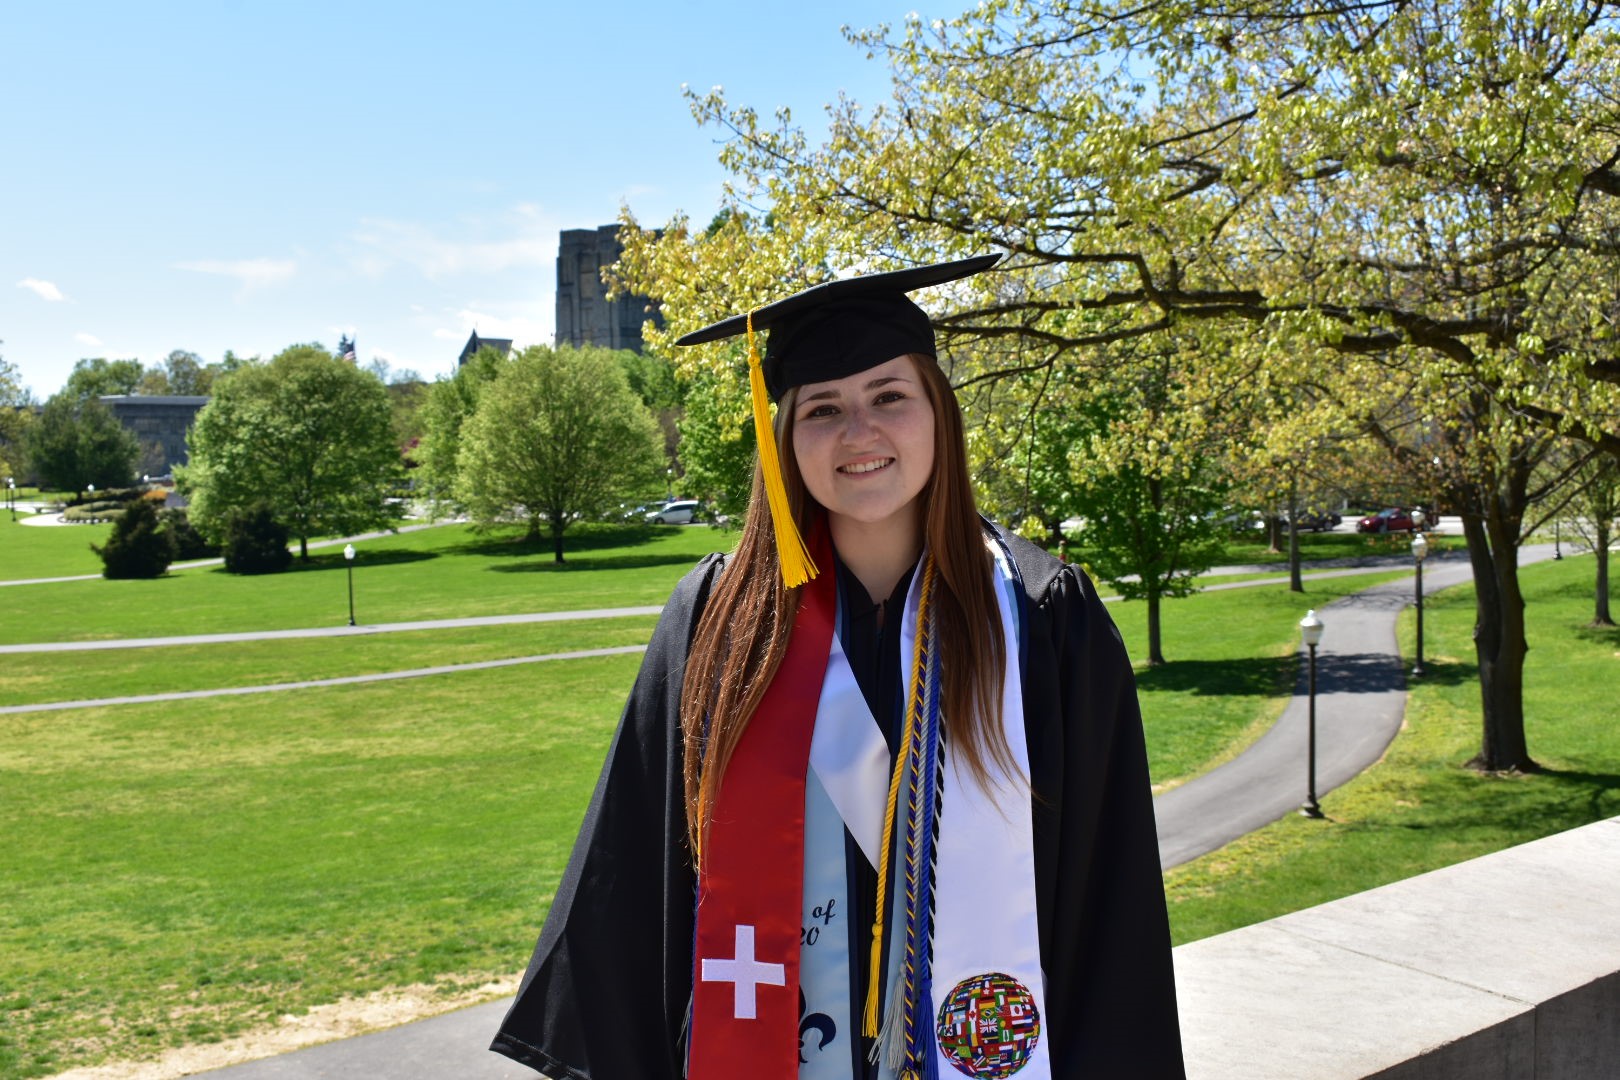 After graduating from Virginia Tech, Shelly Worek will return to Switzerland to begin graduate studies at ETH Zurich.